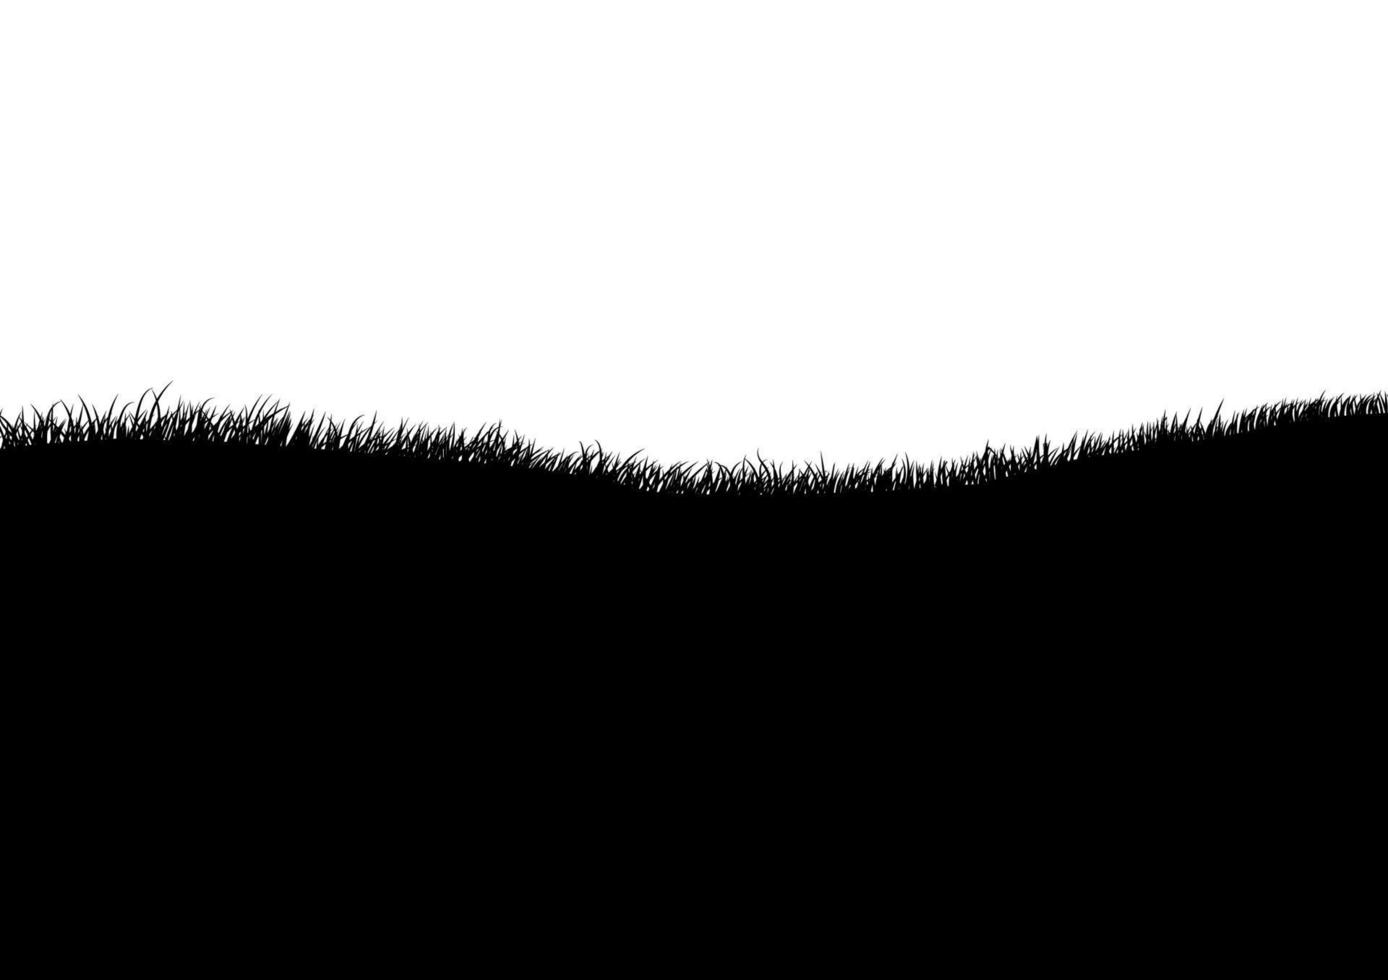 graphics design grass on white background vector illustration for wallpaper background